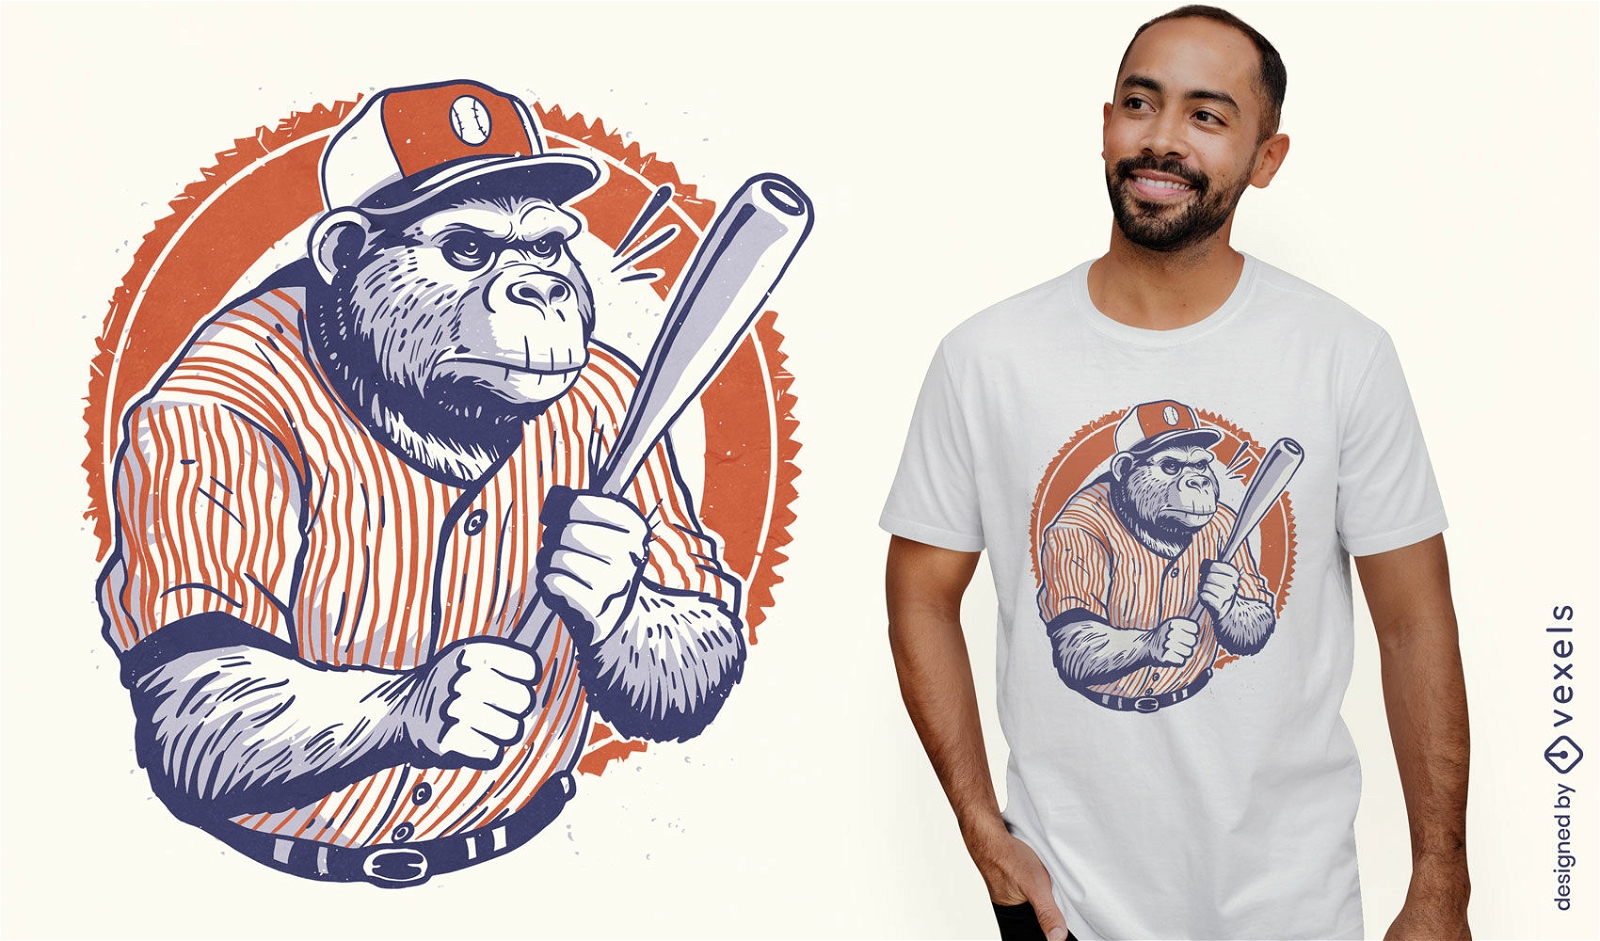 Baseball player gorilla t-shirt design